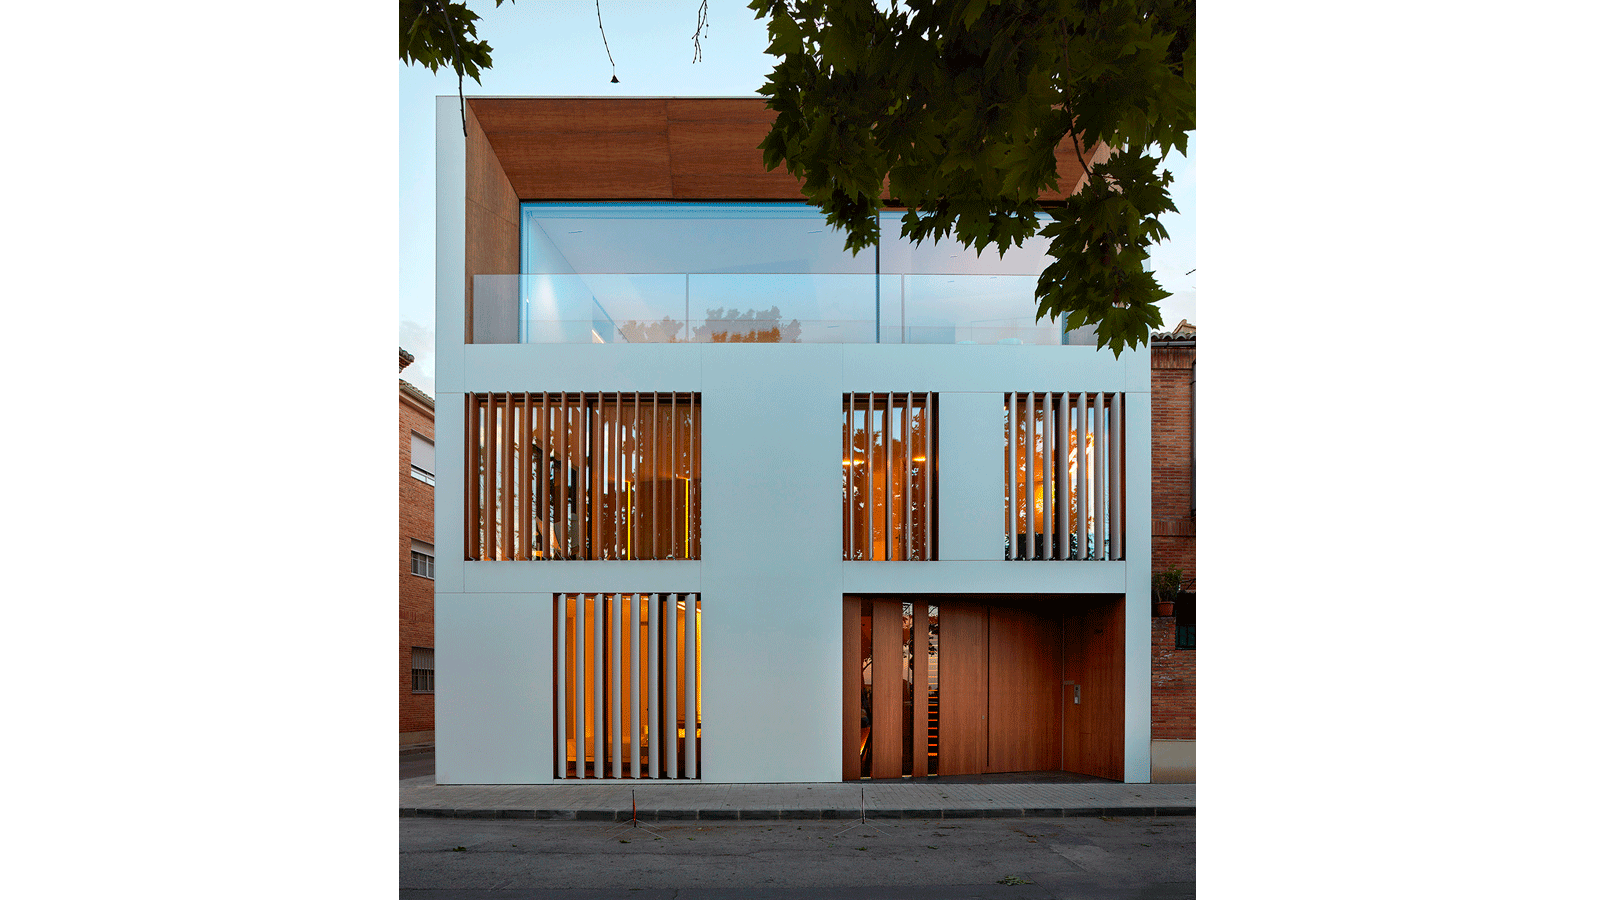 PORCELANOSA Grupo Projects: Geometria minimalista nella ‘Casa en la huerta’ di Ramón Esteve Estudio